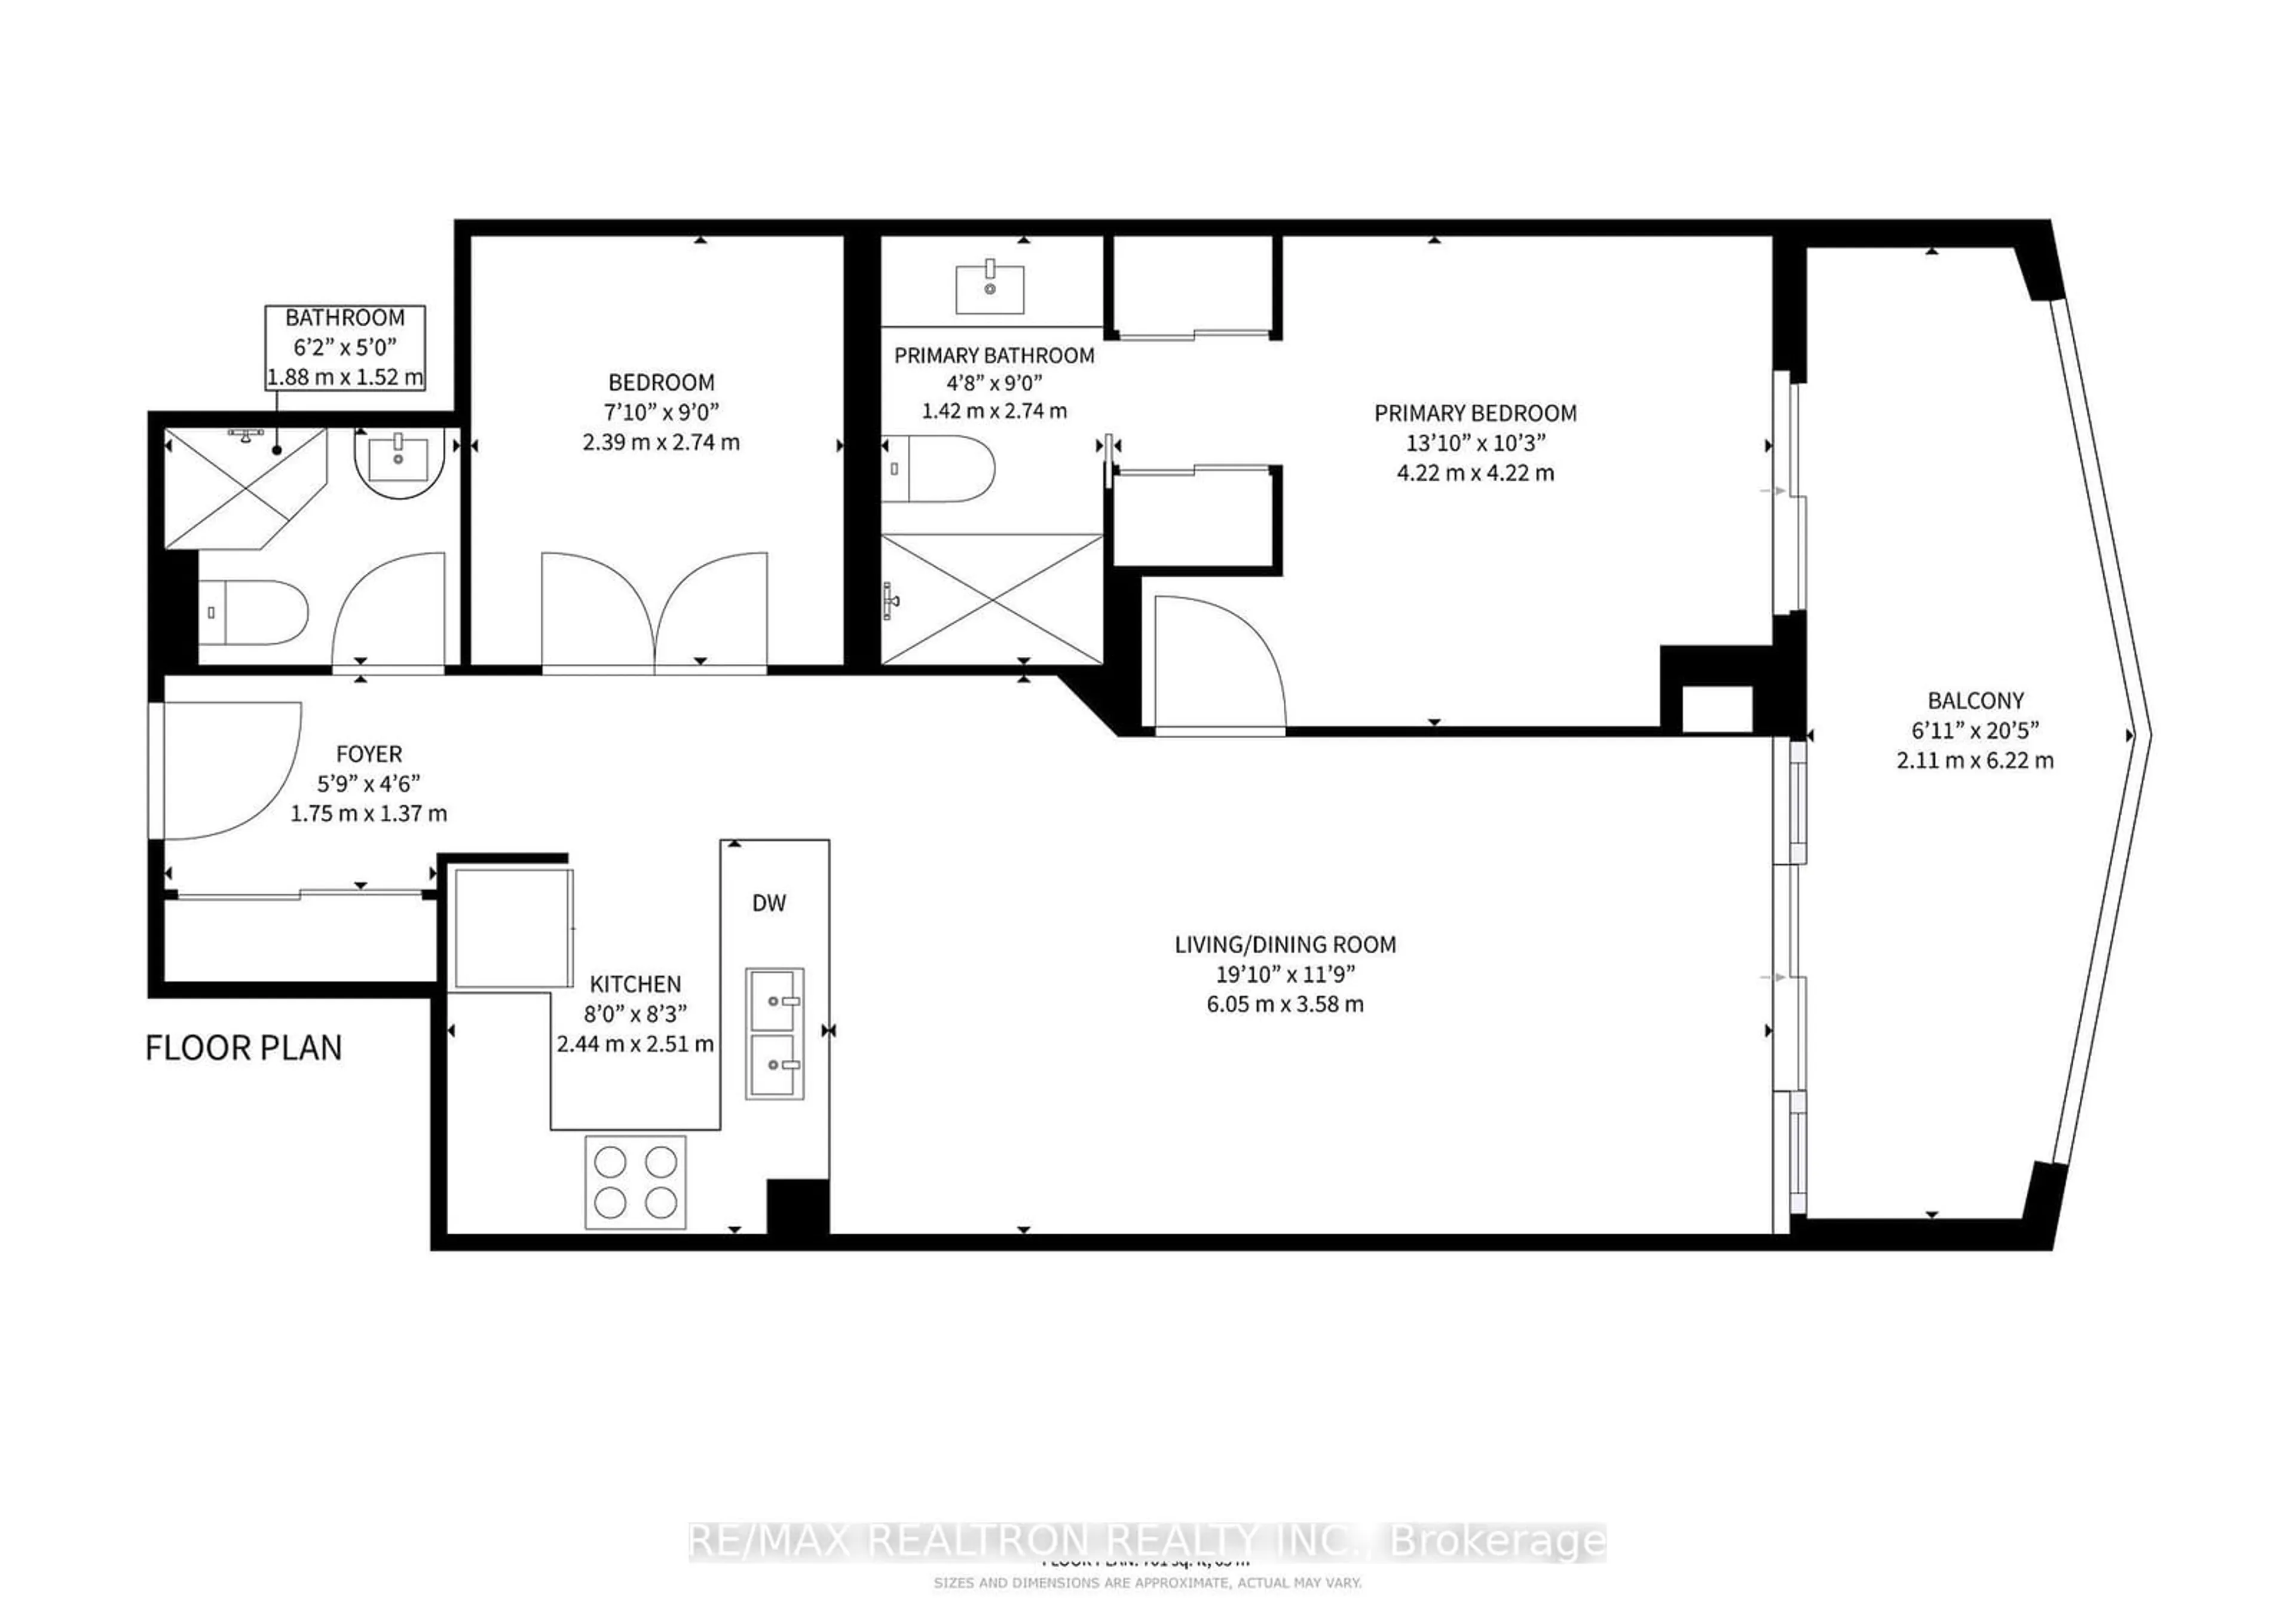 Floor plan for 8 Rean Dr #1003, Toronto Ontario M2K 3B9